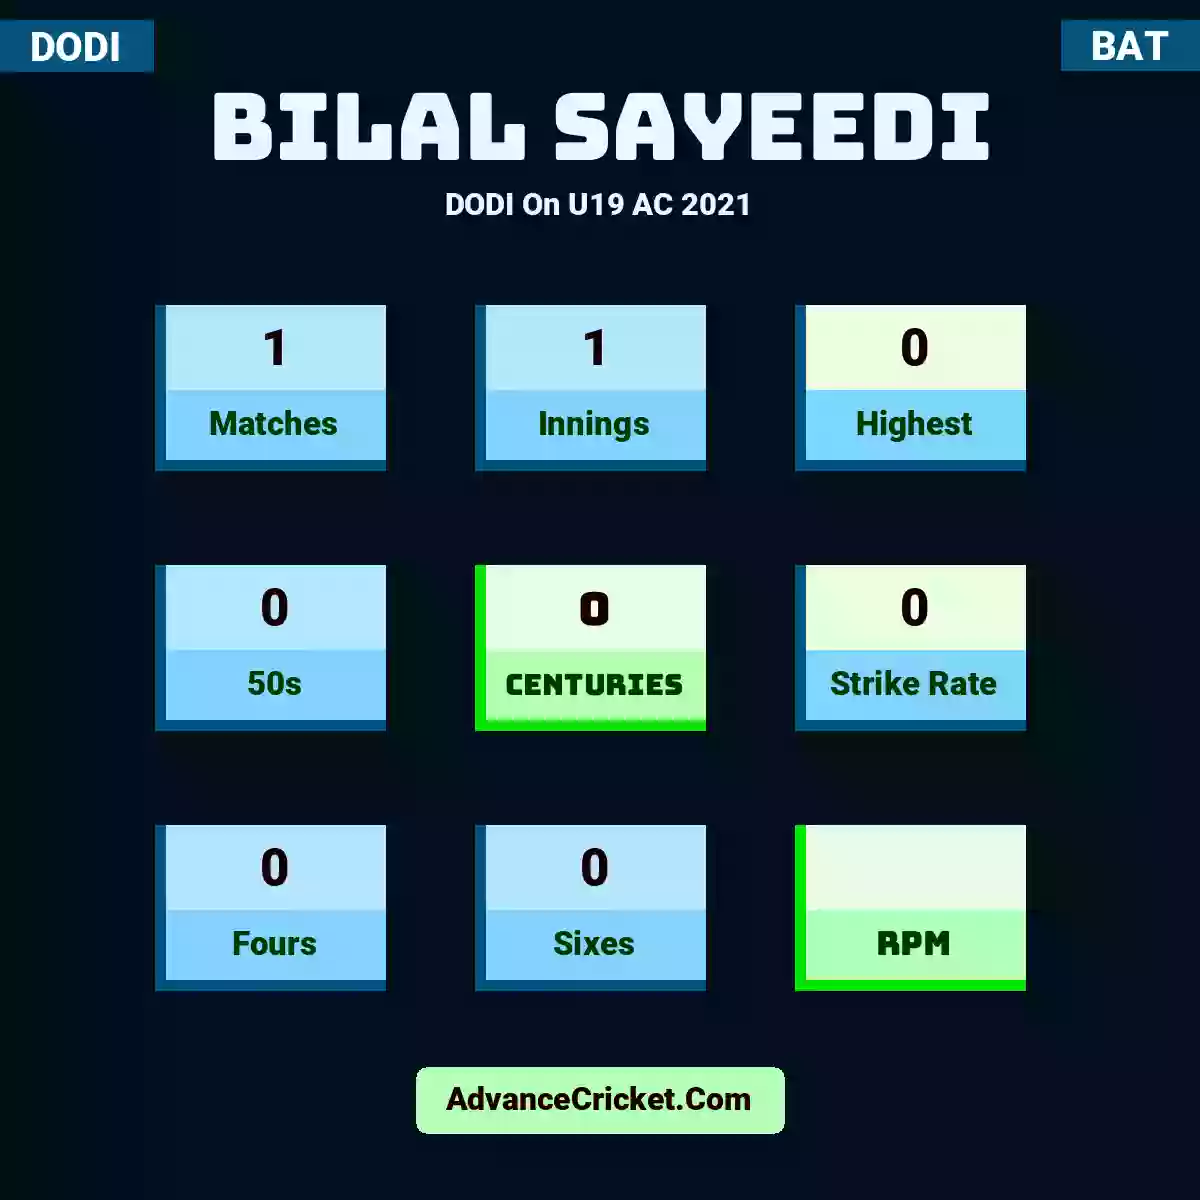 Bilal Sayeedi DODI  On U19 AC 2021, Bilal Sayeedi played 1 matches, scored 0 runs as highest, 0 half-centuries, and 0 centuries, with a strike rate of 0. B.Sayeedi hit 0 fours and 0 sixes.